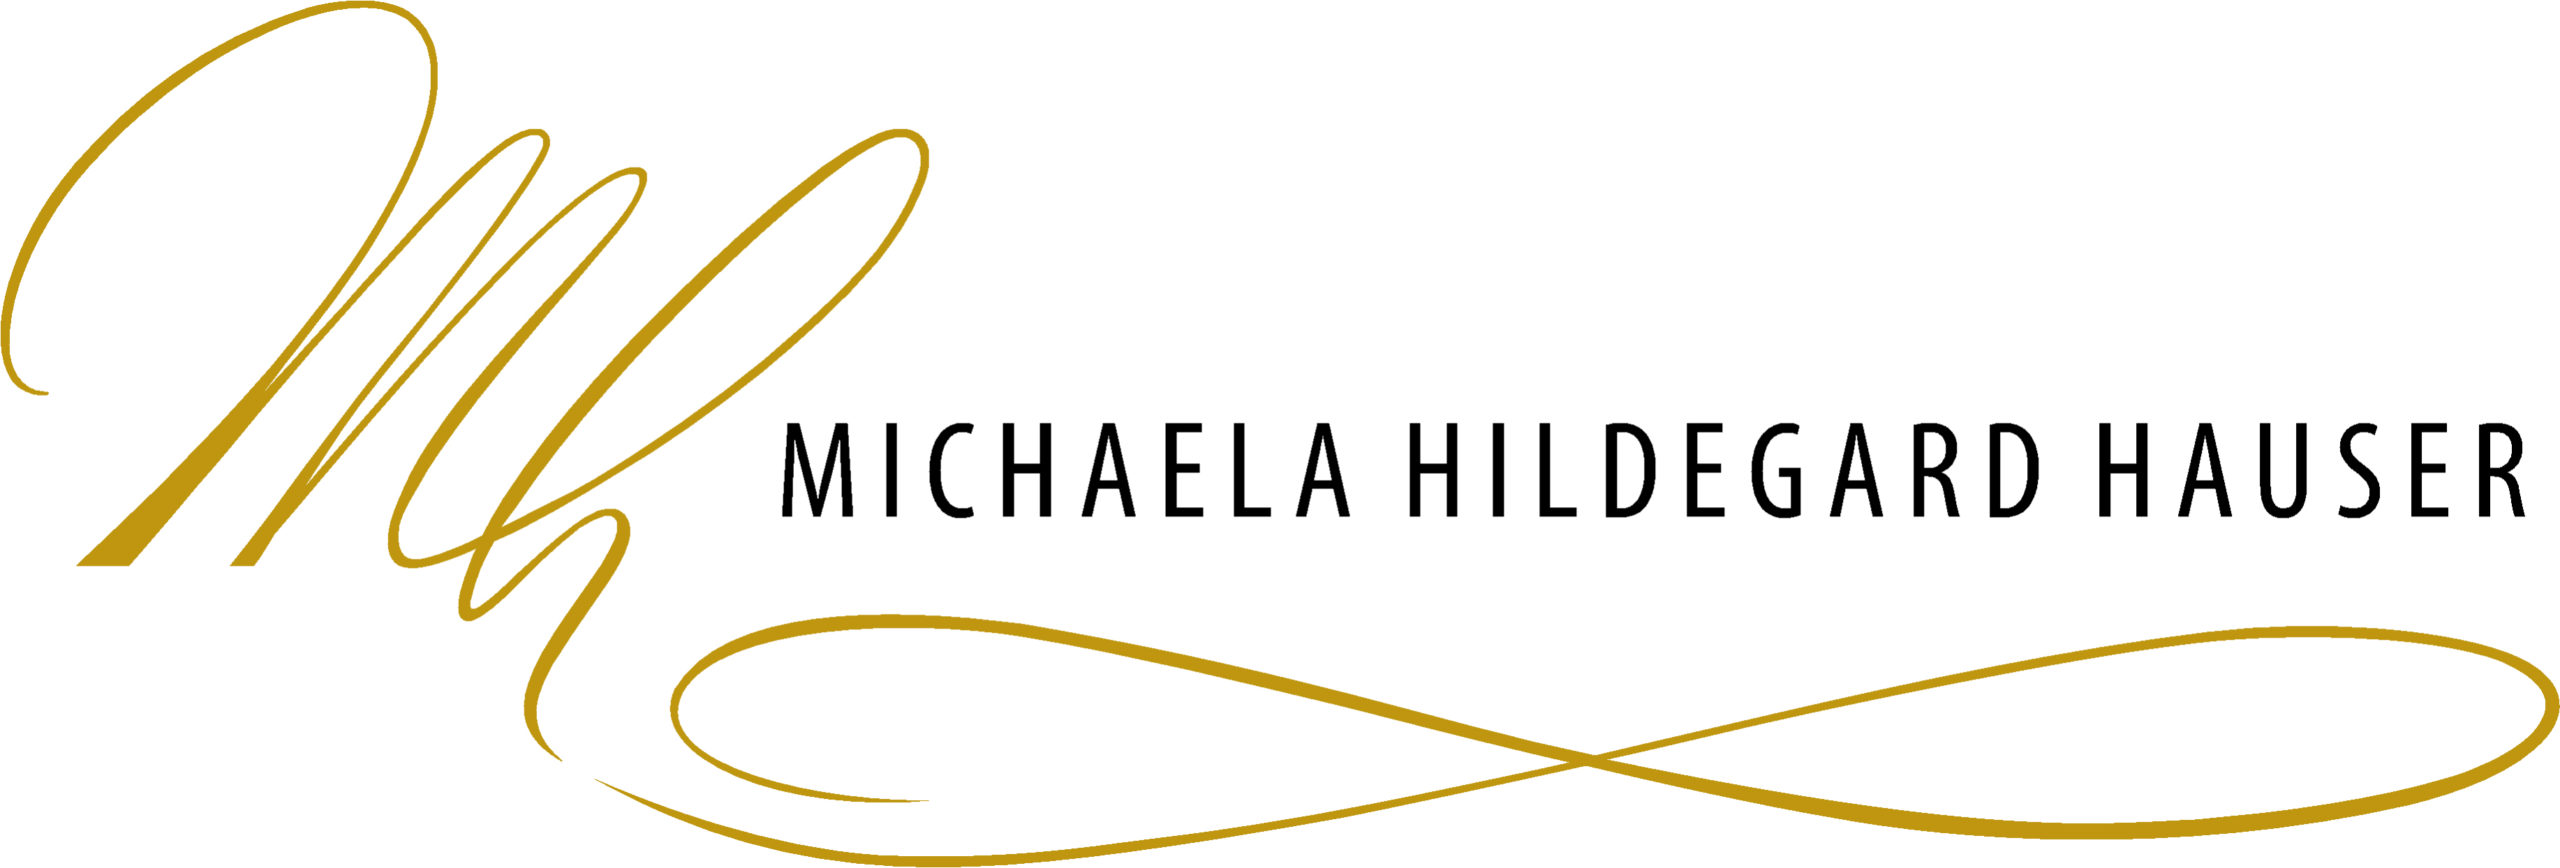 Mag. Michaela Hildegard Hauser